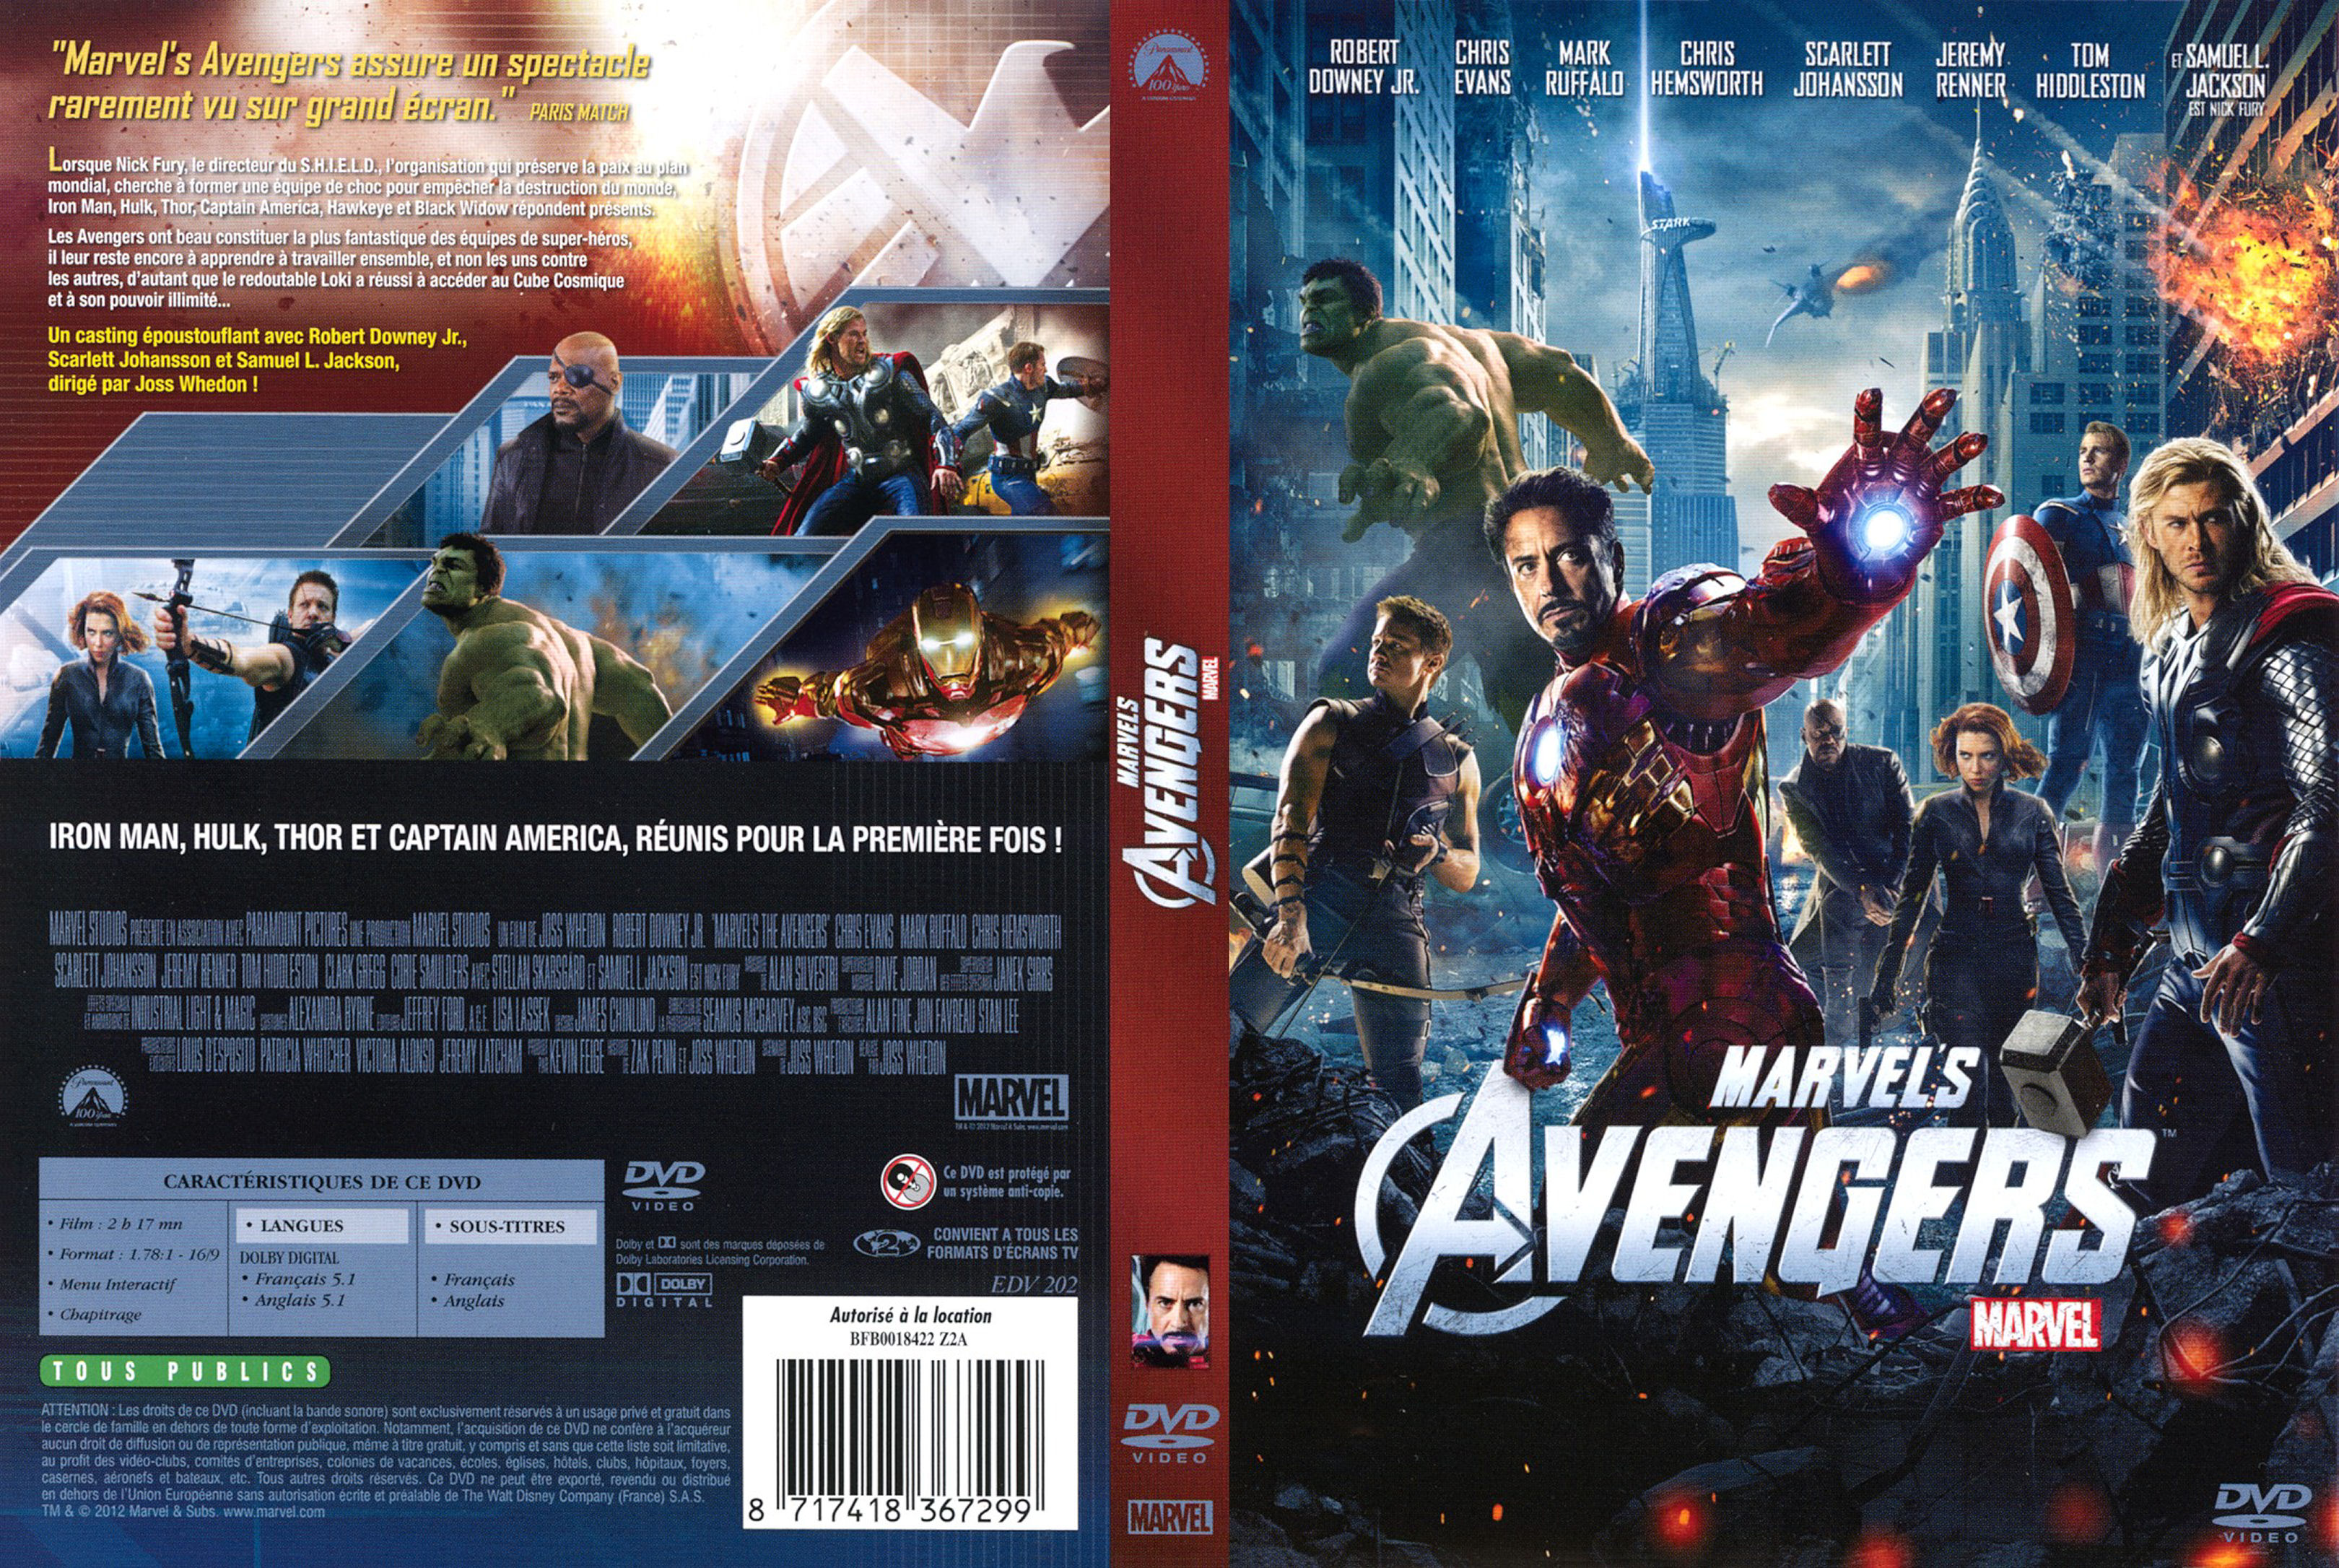 Jaquette DVD Avengers